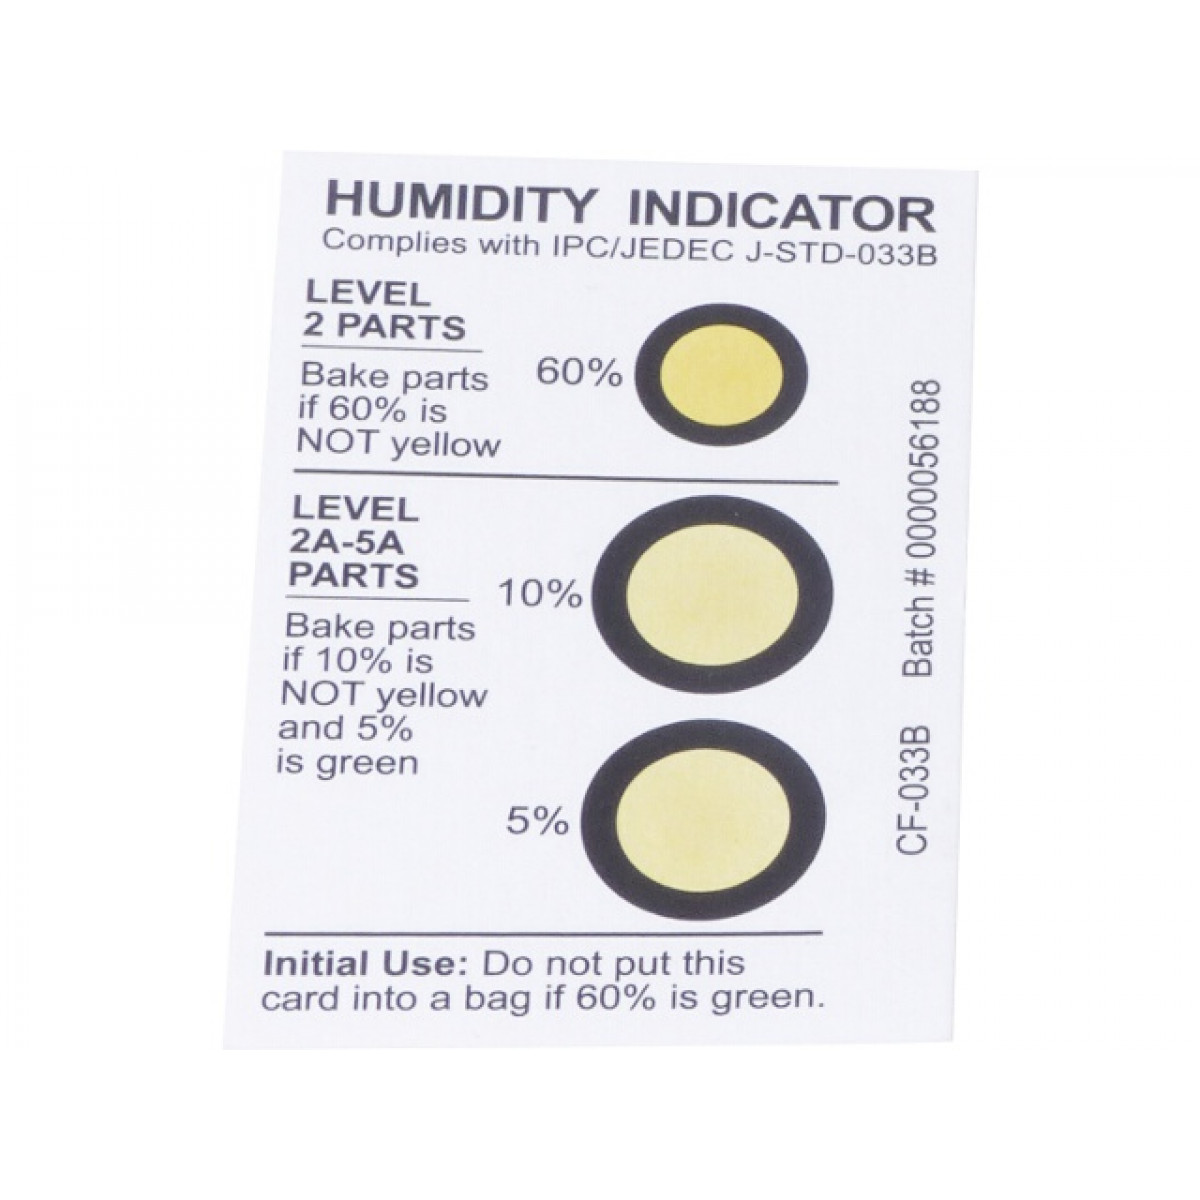 Humidity indicators